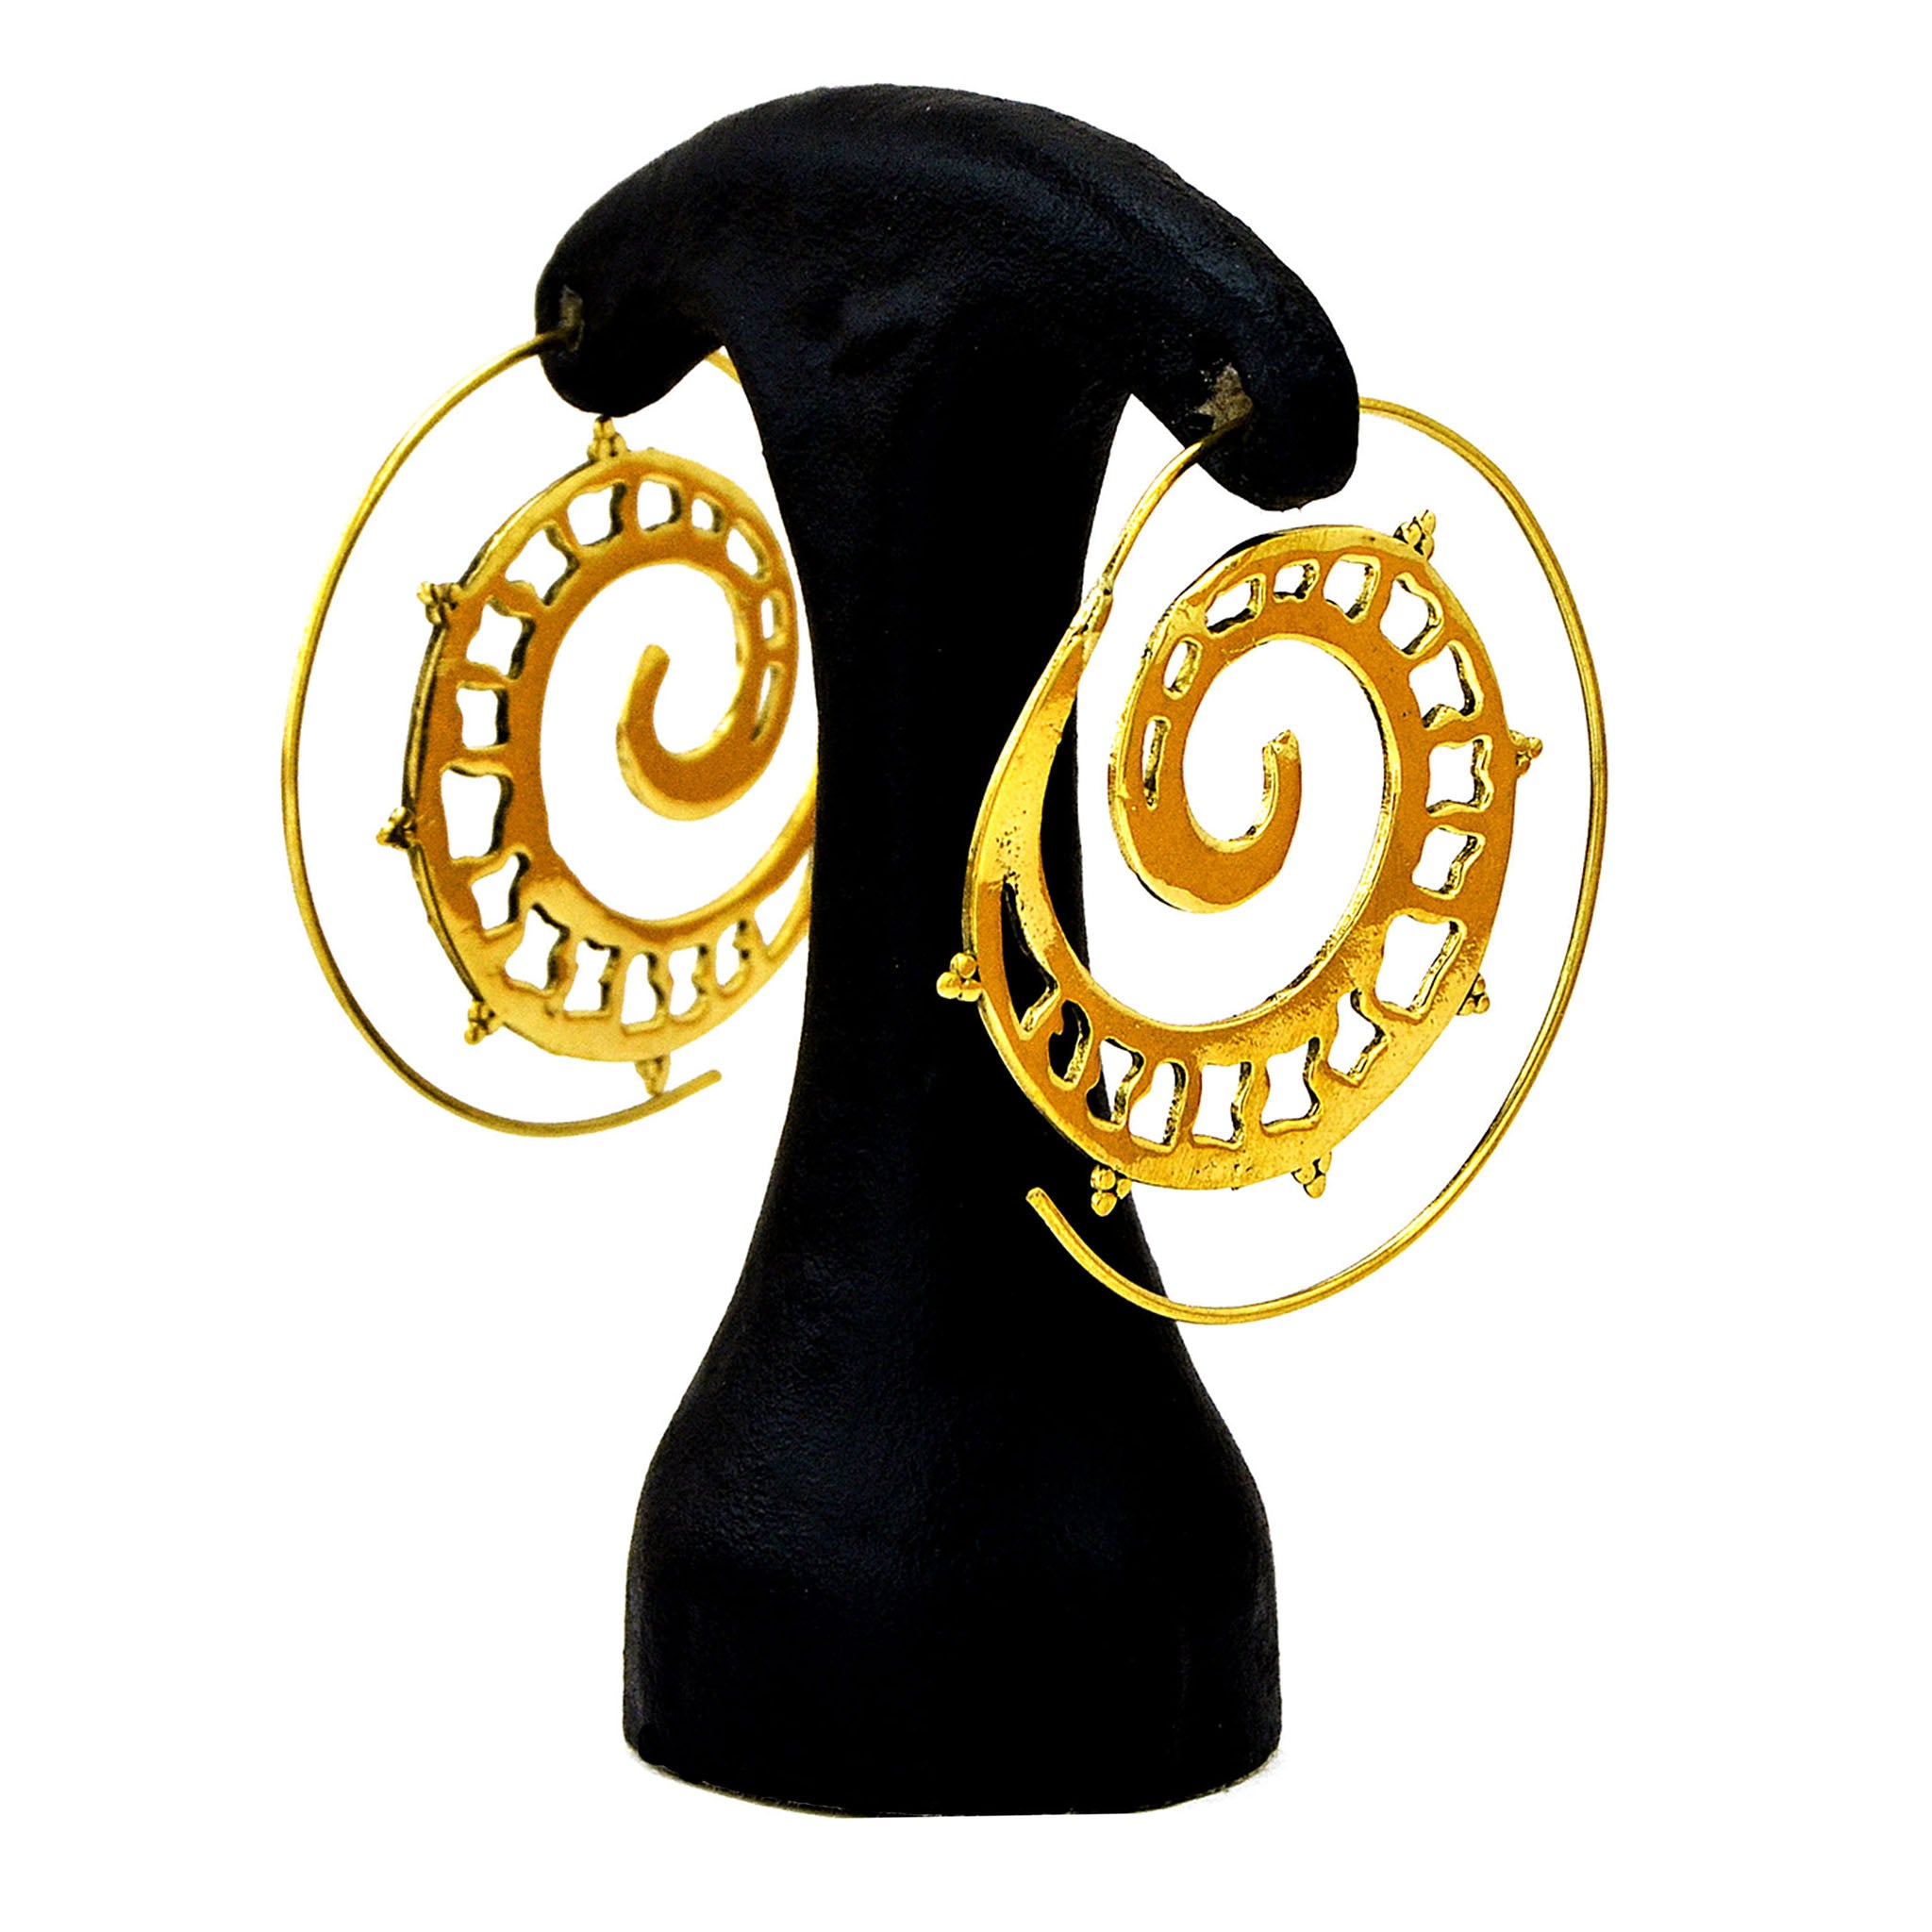 Ethnic swirl earrings